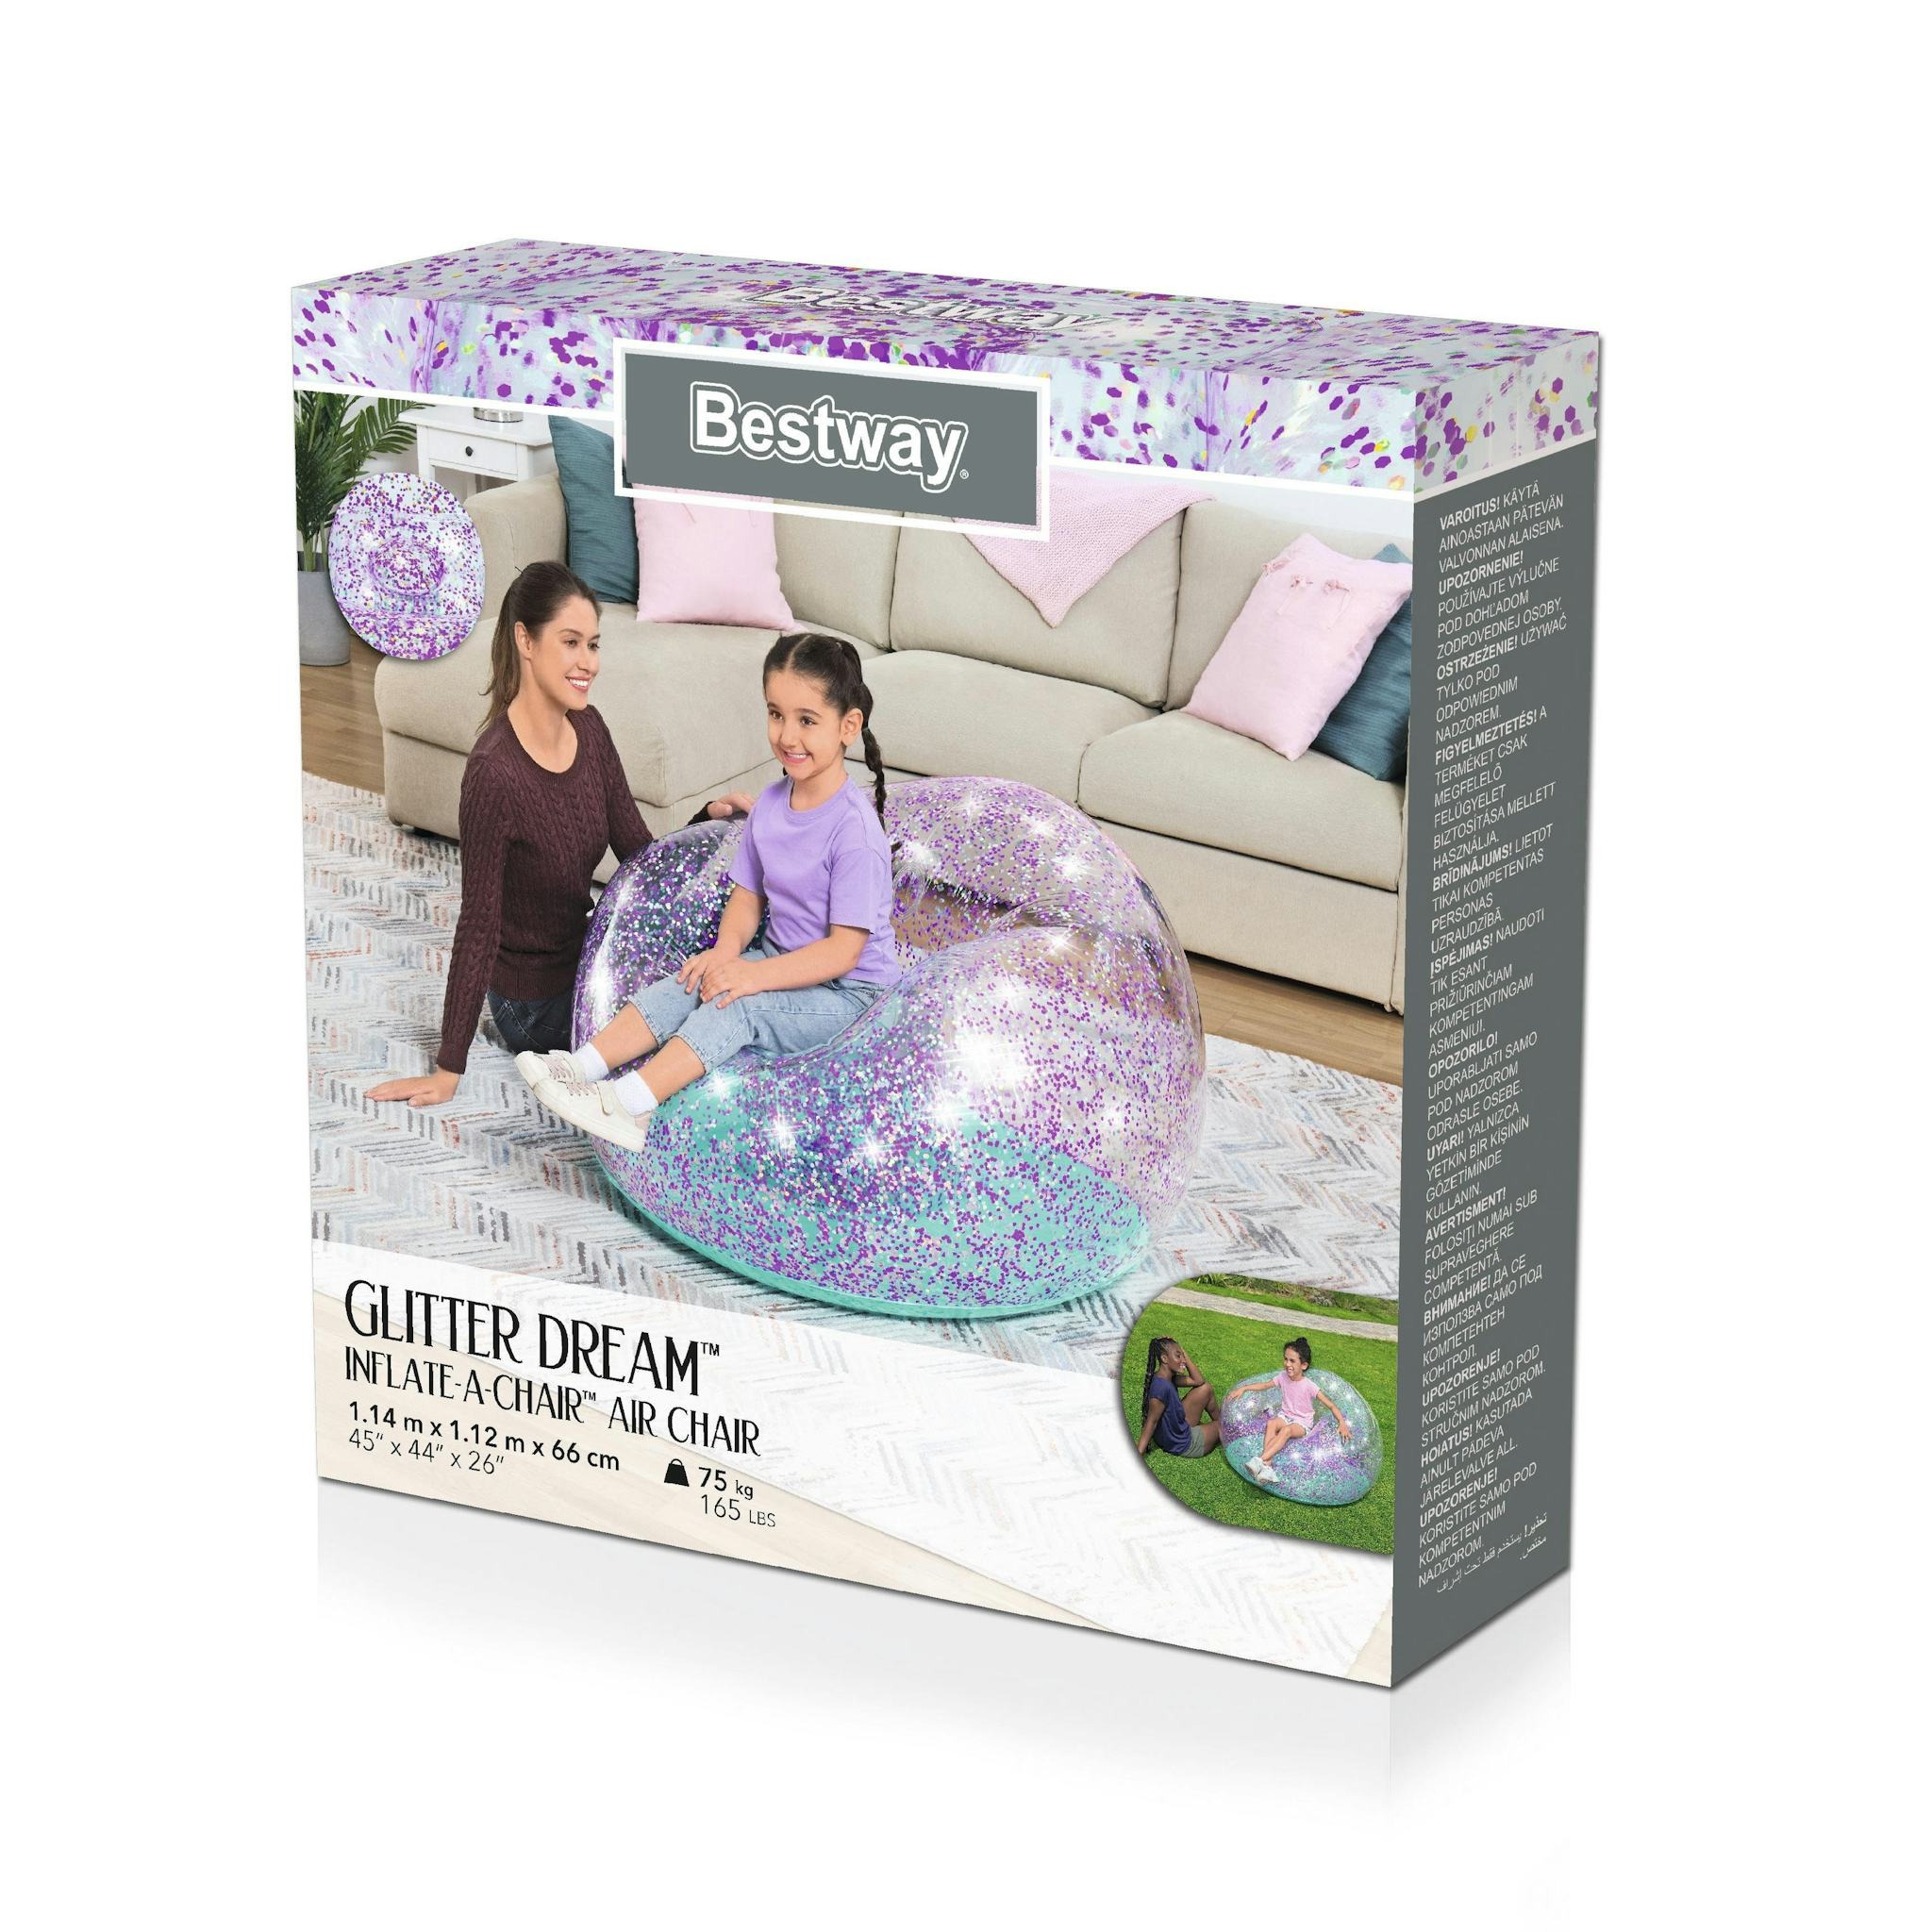 Giochi gonfiabili per bambini Poltrona pouf gonfiabile Glitter Dream Bestway 5